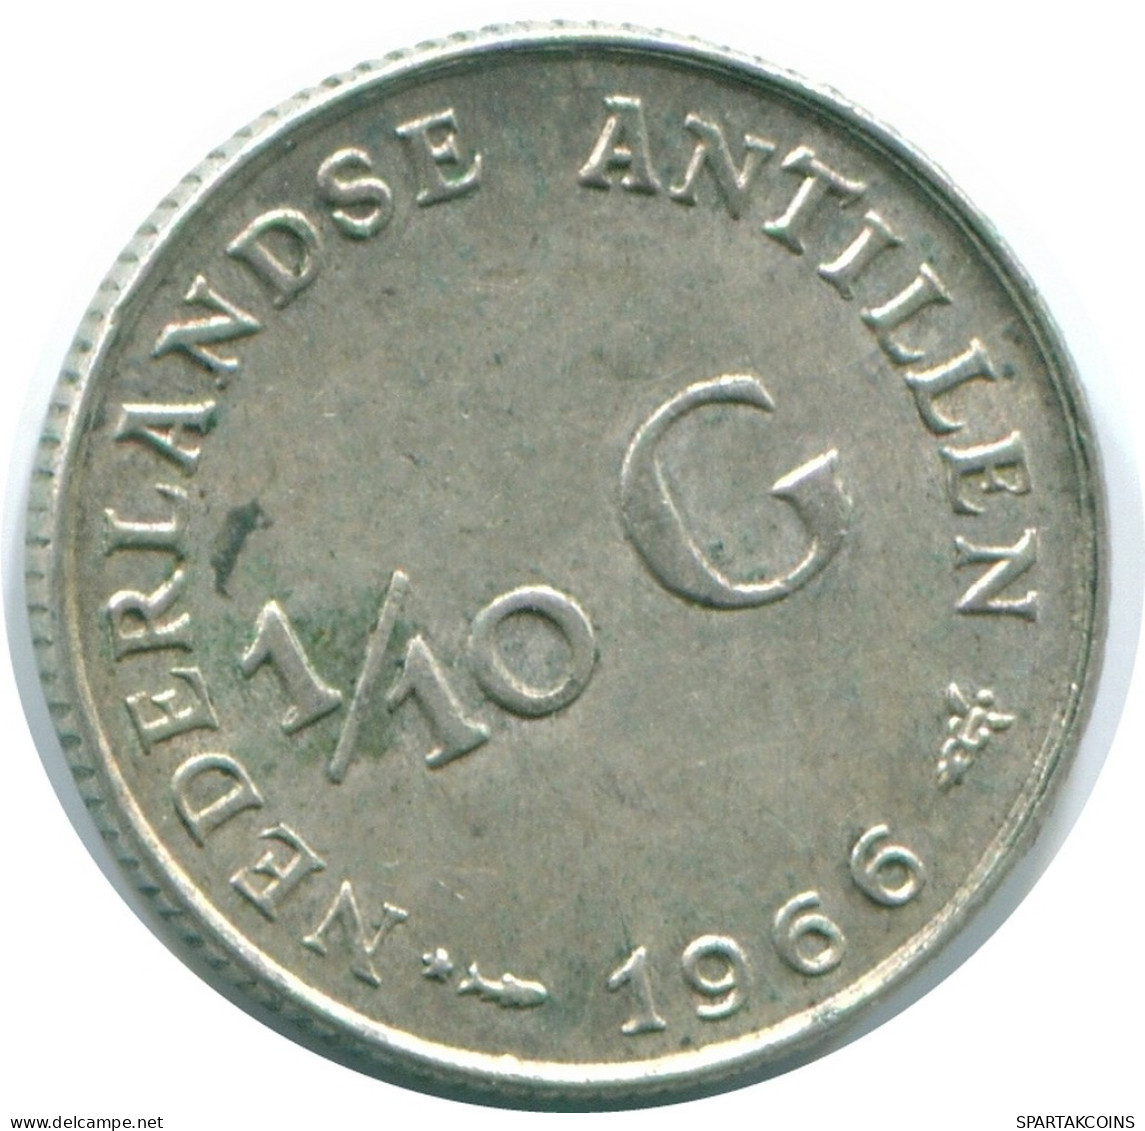 1/10 GULDEN 1966 NIEDERLÄNDISCHE ANTILLEN SILBER Koloniale Münze #NL12938.3.D.A - Netherlands Antilles